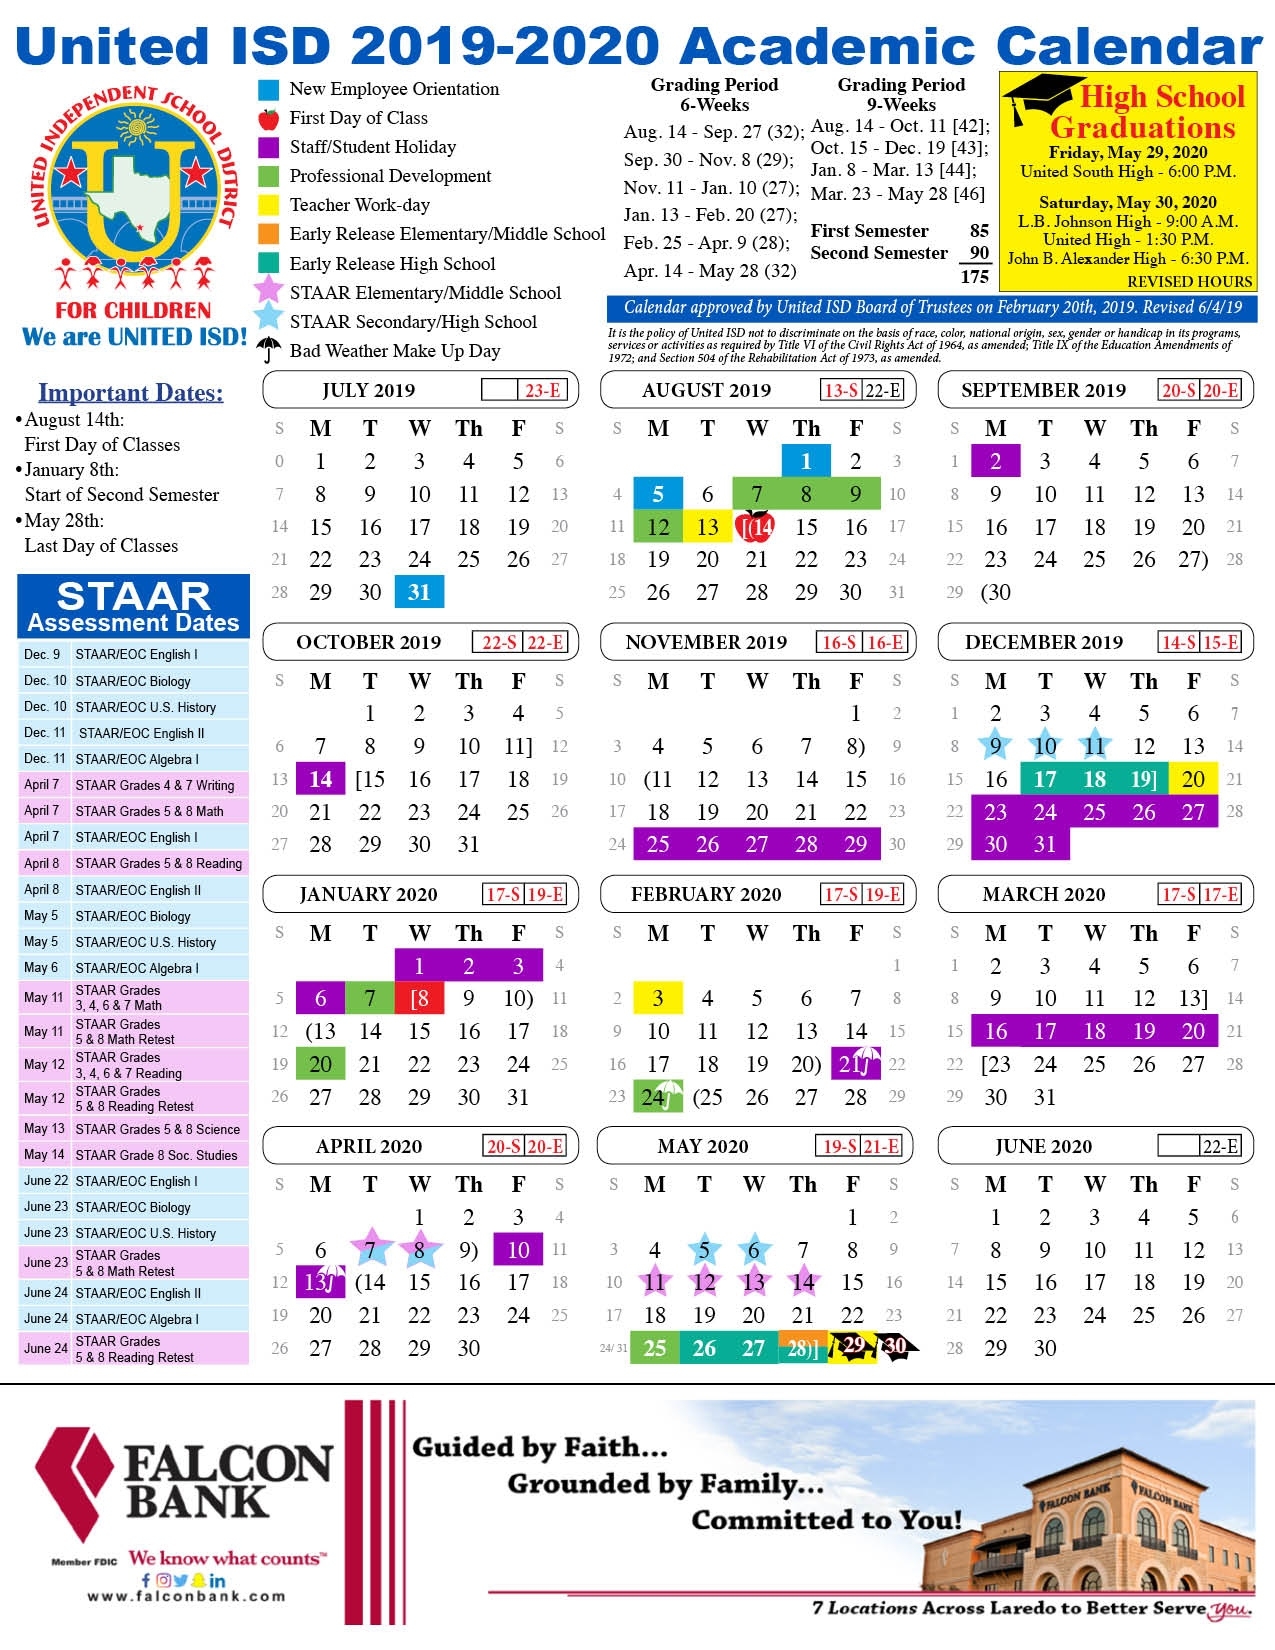 United Isd - Academic Calendar Impressive Freedom 7 School Calendar